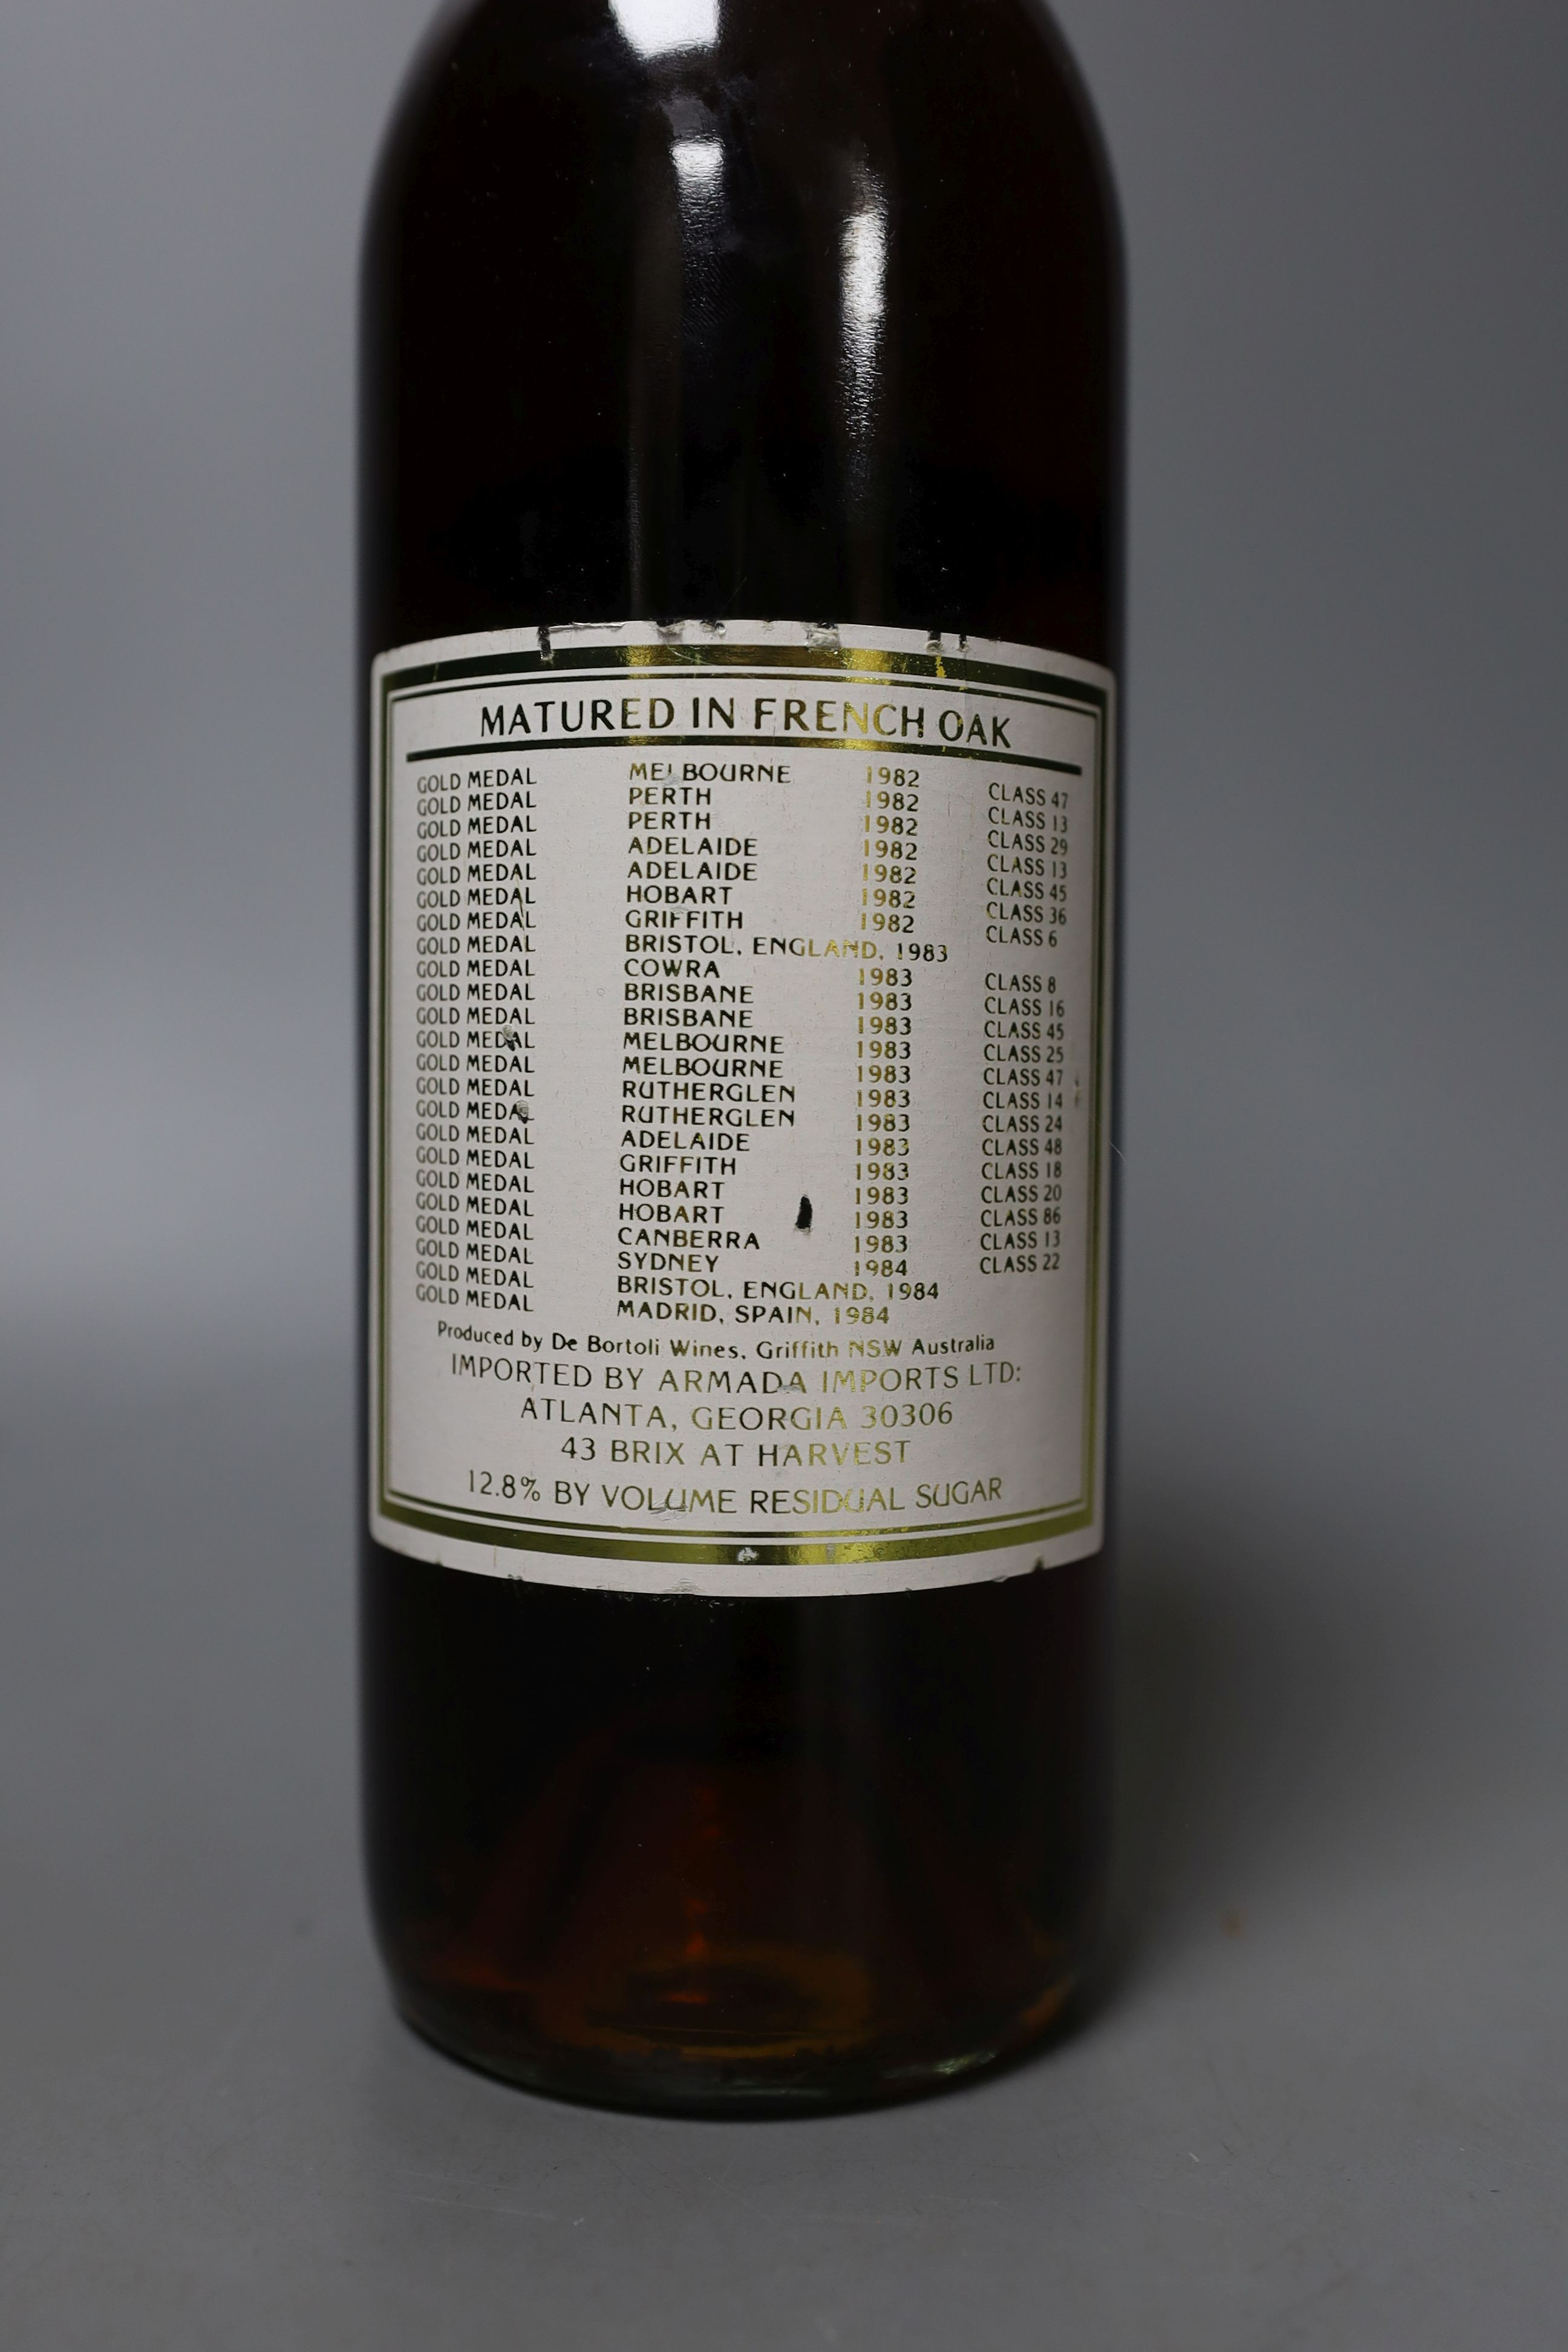 A bottle of De Bortoli Sauternes (Noble One) Botrytis Semillion - Yarra Valley, the first vintage 1982 75cl